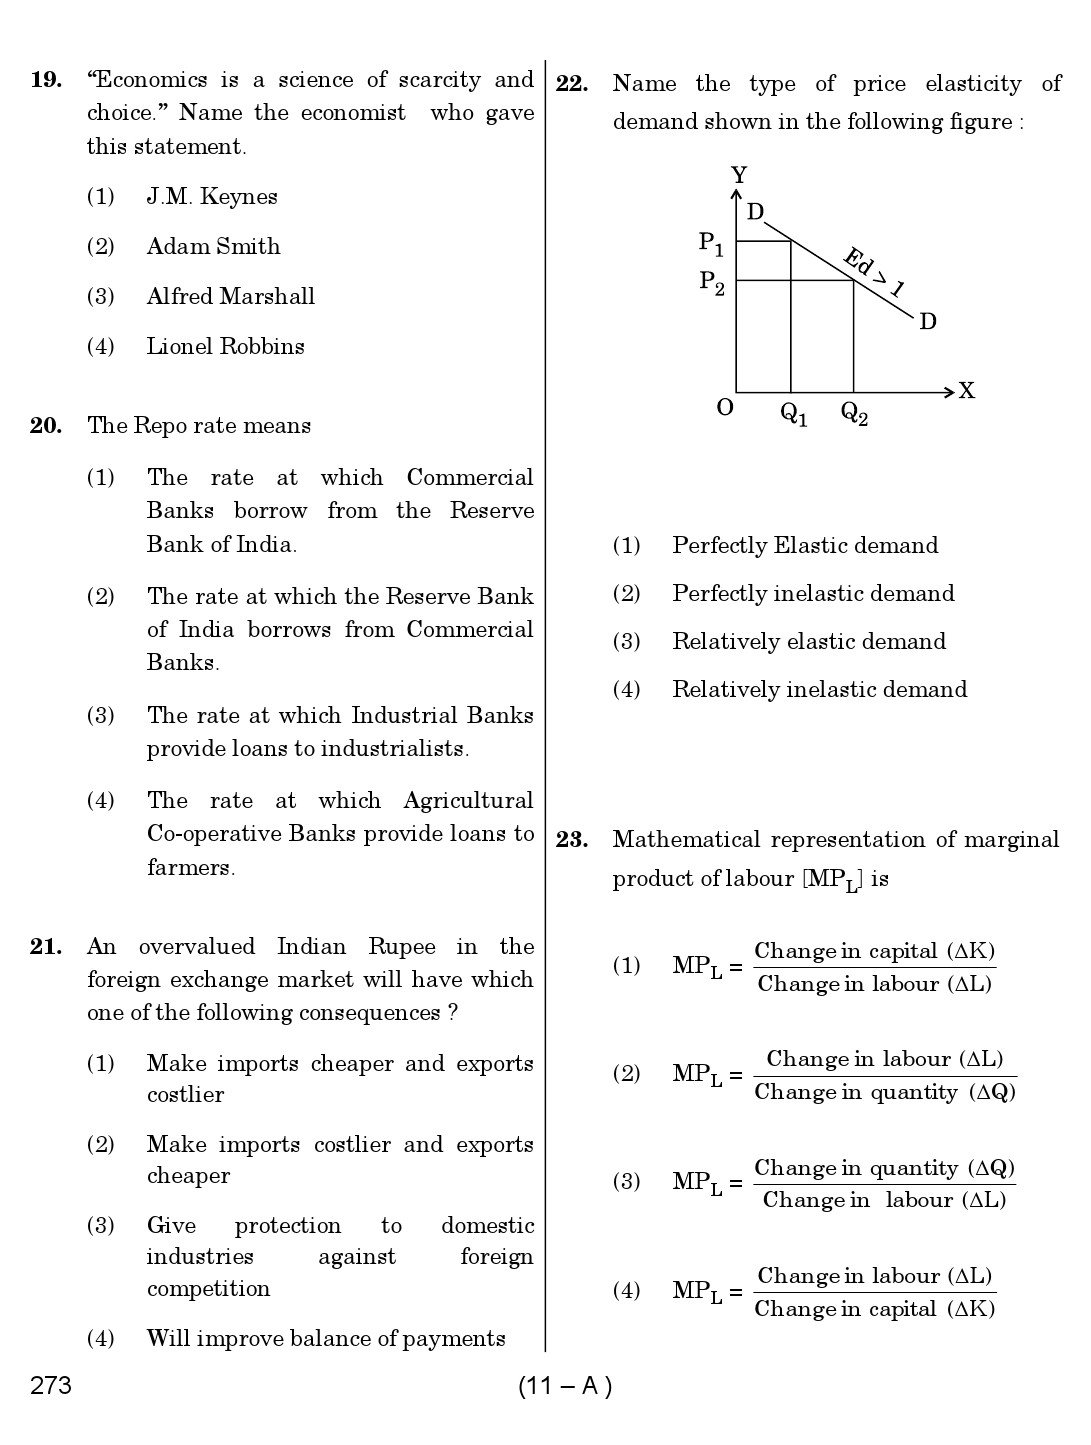 Karnataka PSC Social Science Teacher Exam Sample Question Paper Subject code 273 11